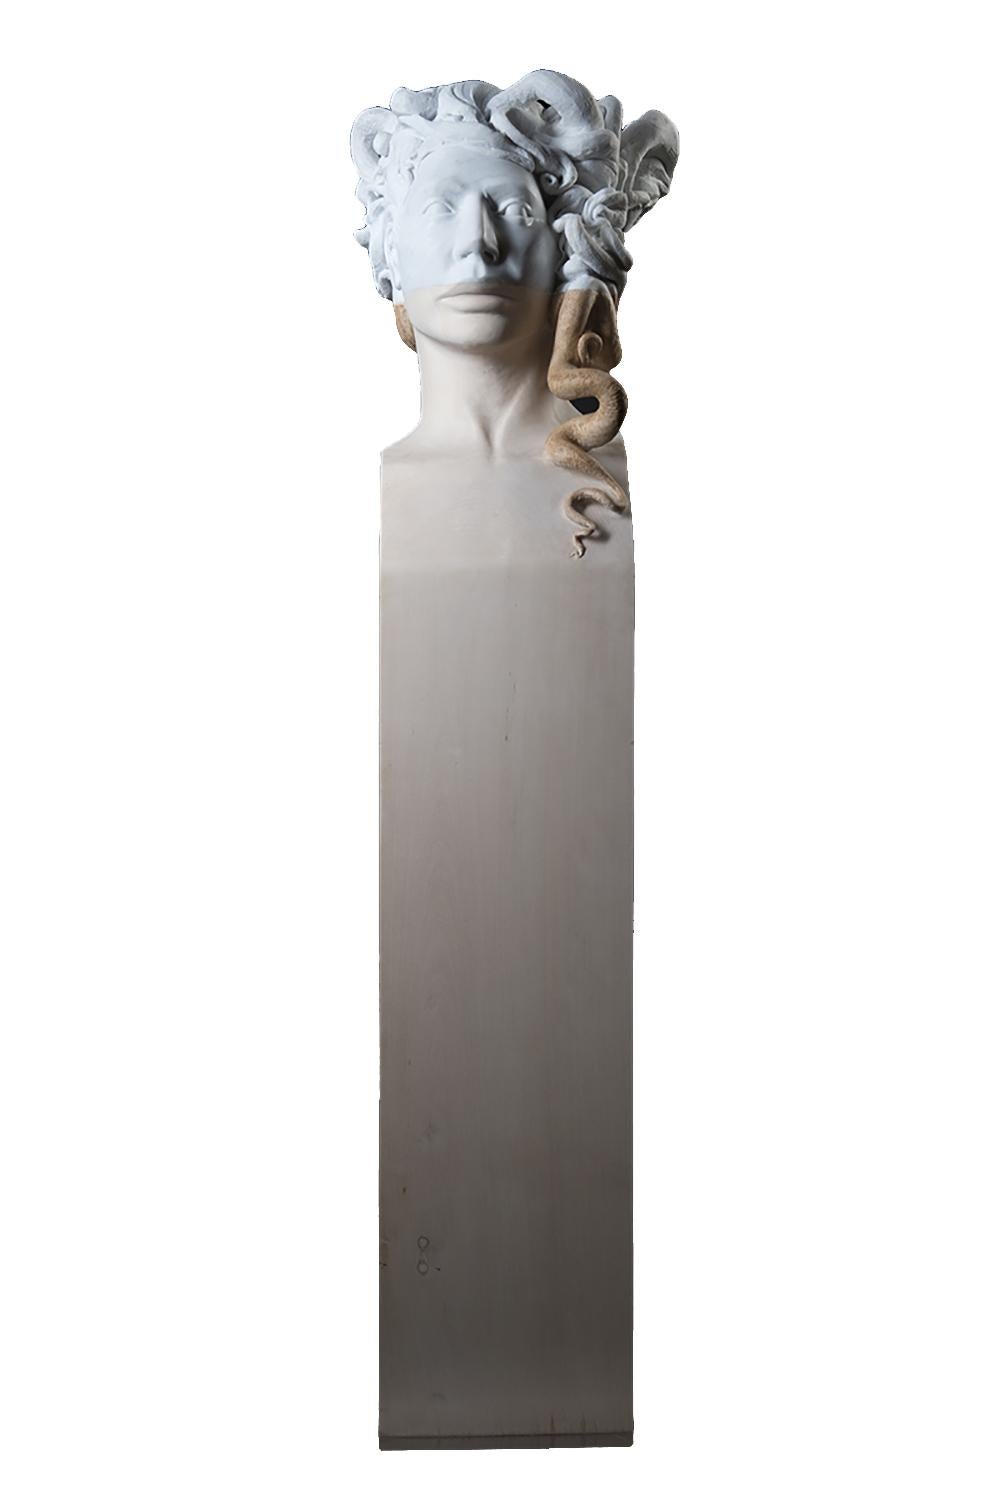 Lorenzo Vignoli Nude Sculpture - Medusa - statuesque hand carved Carrara marble and Italian linden wood sculpture